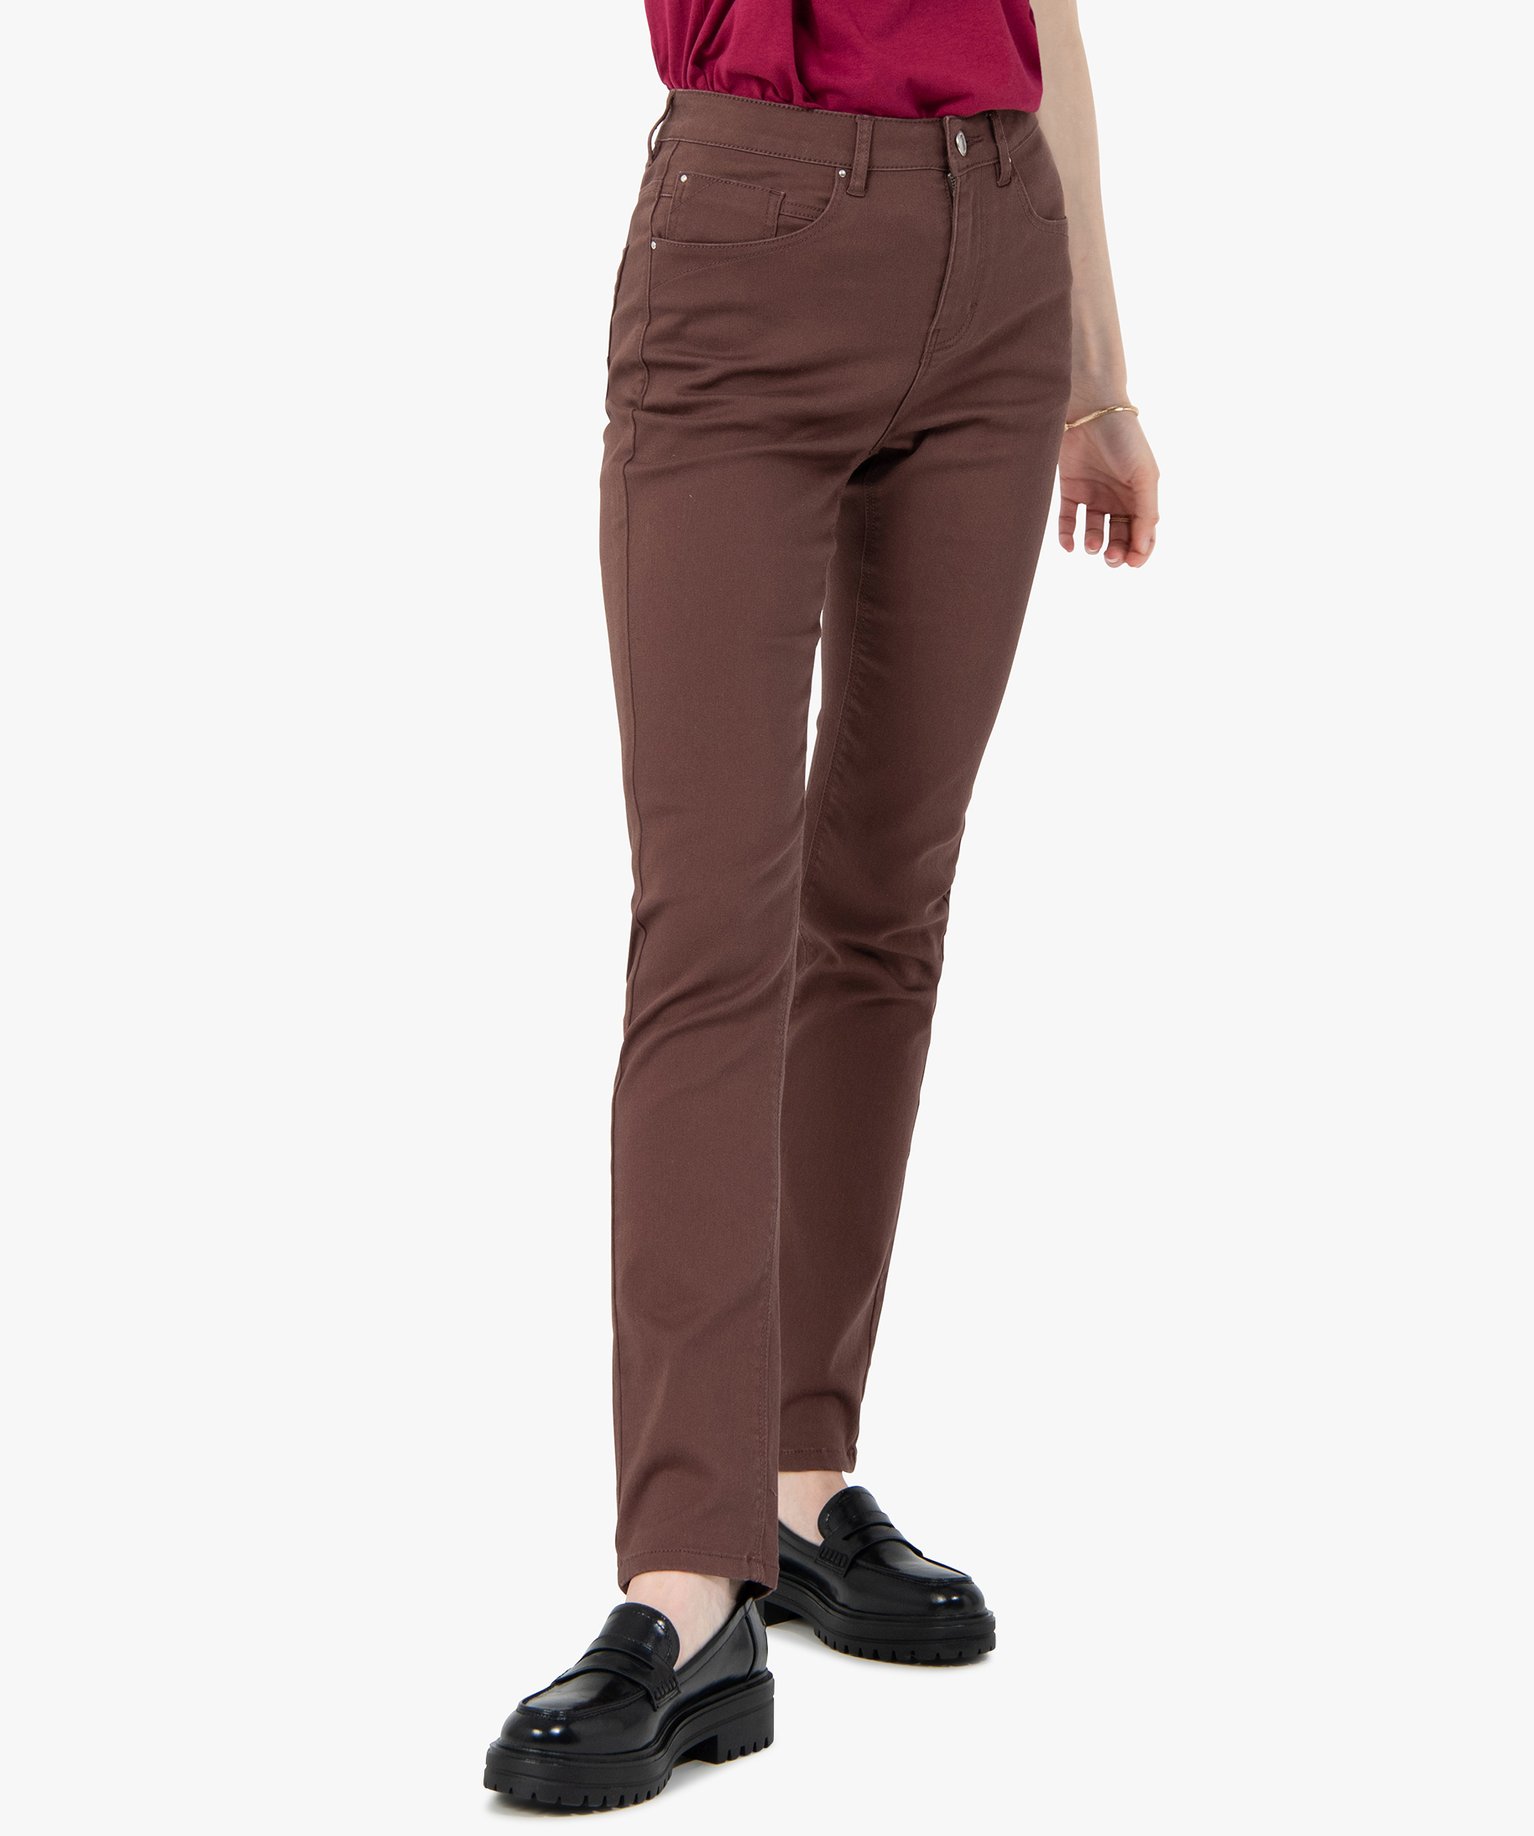 pantalon femme en coton stretch coupe regular brun pantalons